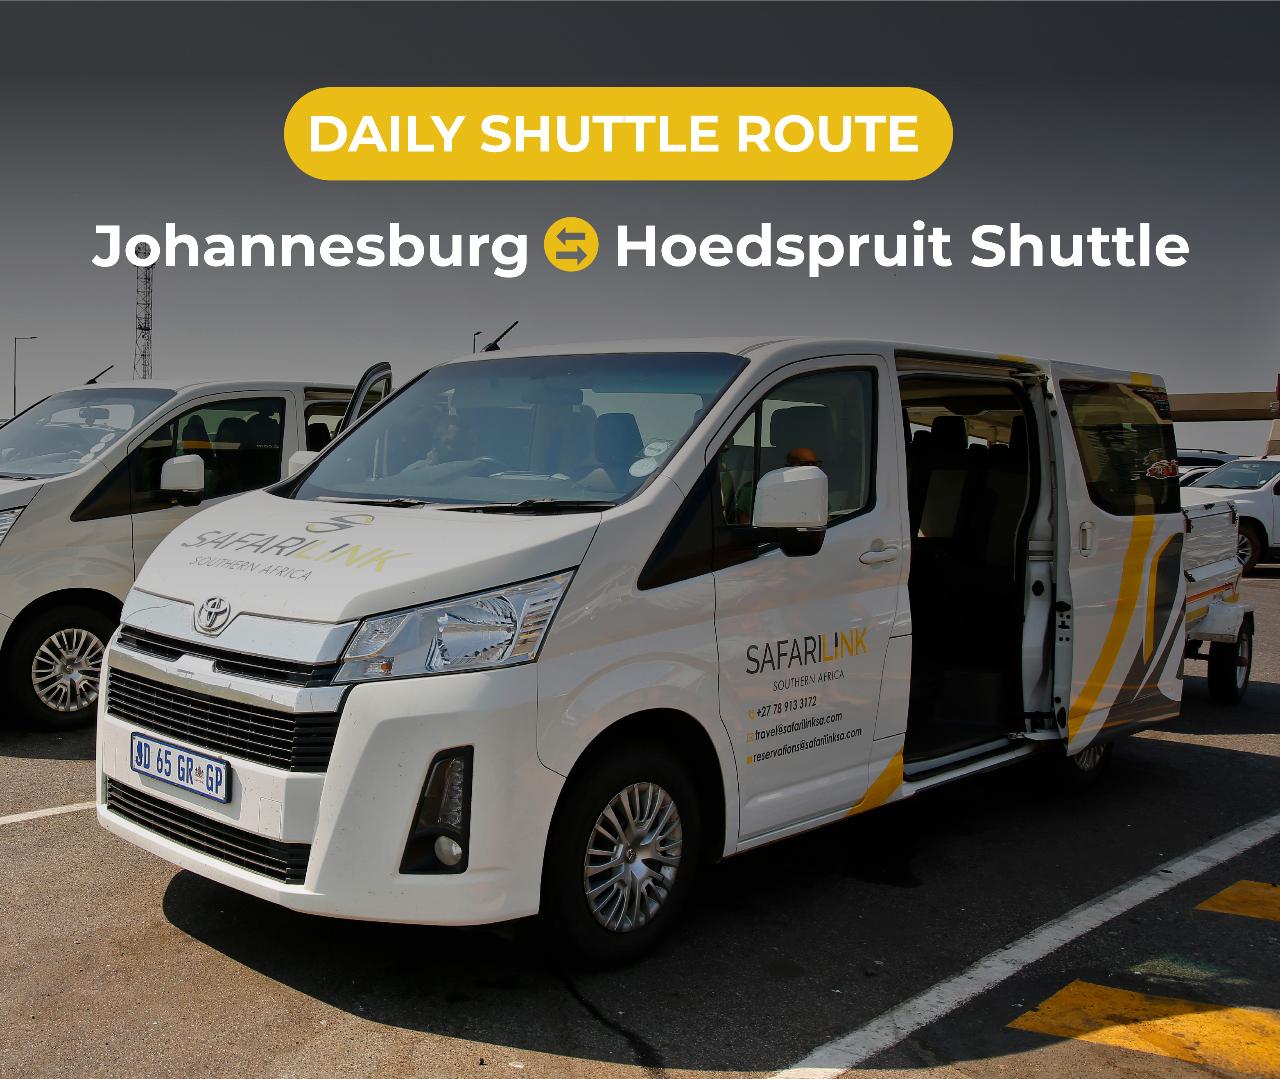  Johannesburg to Hoedspruit Shuttle